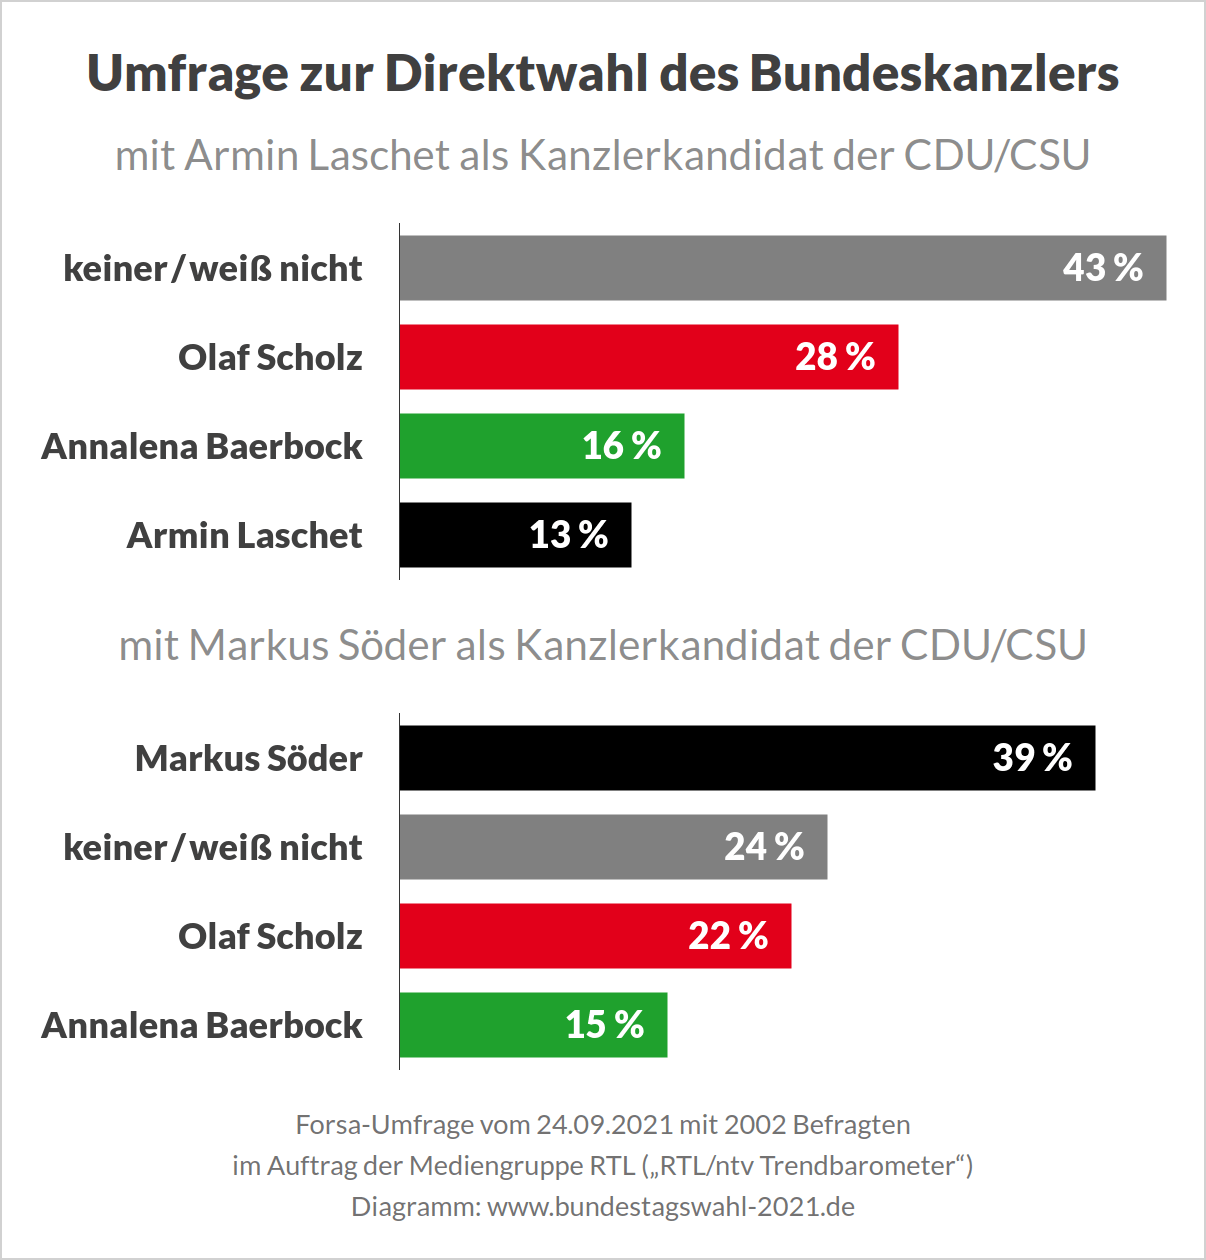 Umfrage zur Direktwahl der Kandidaten bei der Bundestagswahl (Söder vs Laschet vs Baerbock vs Scholz), Forsa